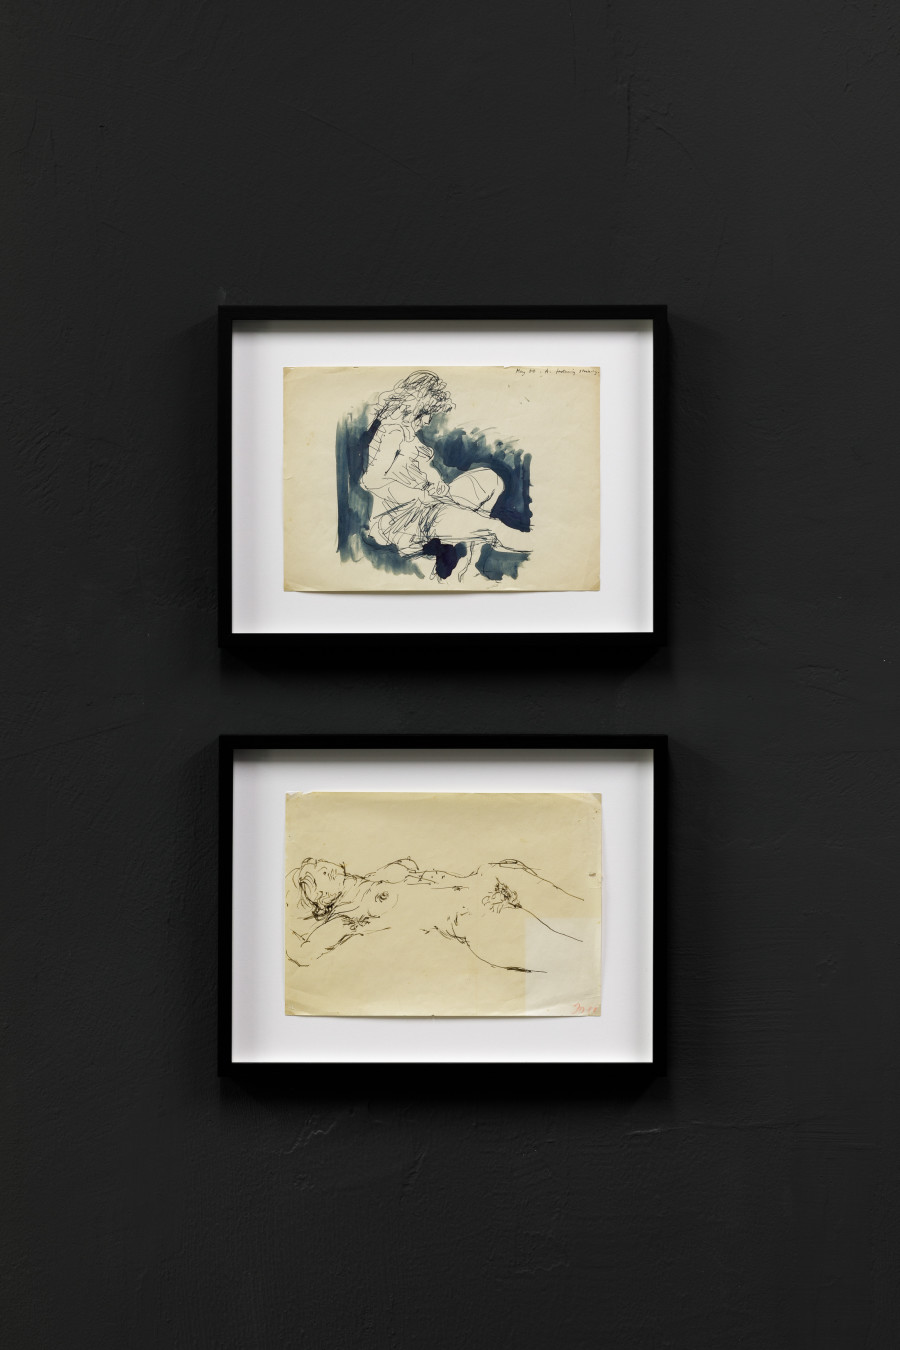 (top) John Berger, A. fastening stocking, 1956, ink on paper, 21 x 29.7 cm (bottom) John Berger, Femme nue allongée, n.d., ink on paper, 21 x 29.5 cm Photo: Kilian Bannwart